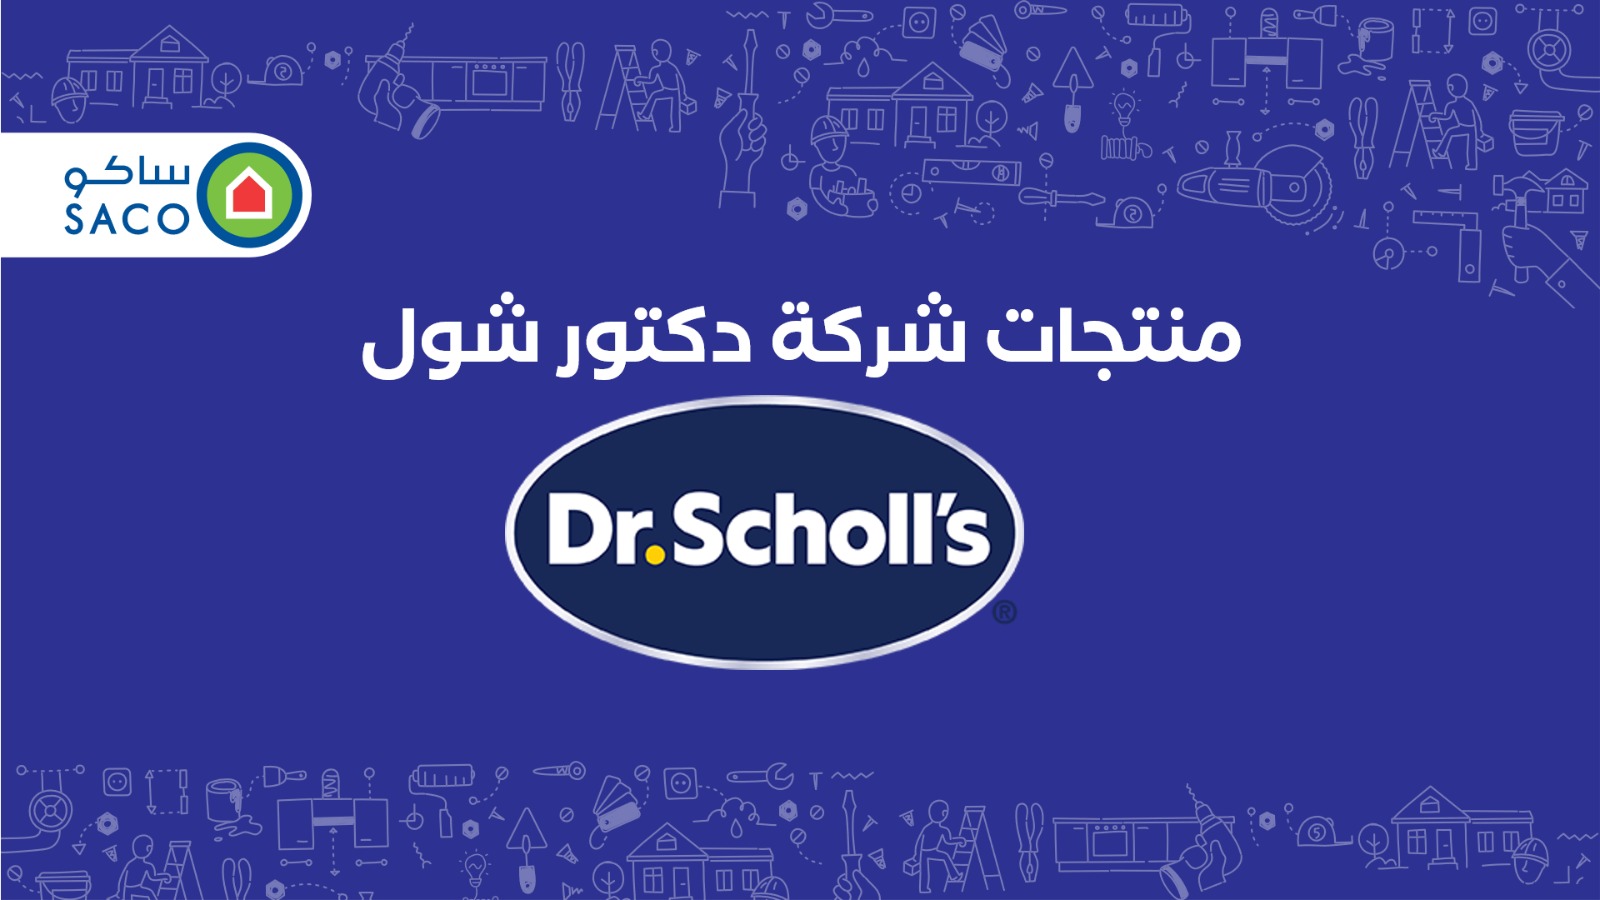 Dr. Scholl's Products (Feet Care) - Arabic منتجات دكتور شول / (عناية بالقدم)  - عربي